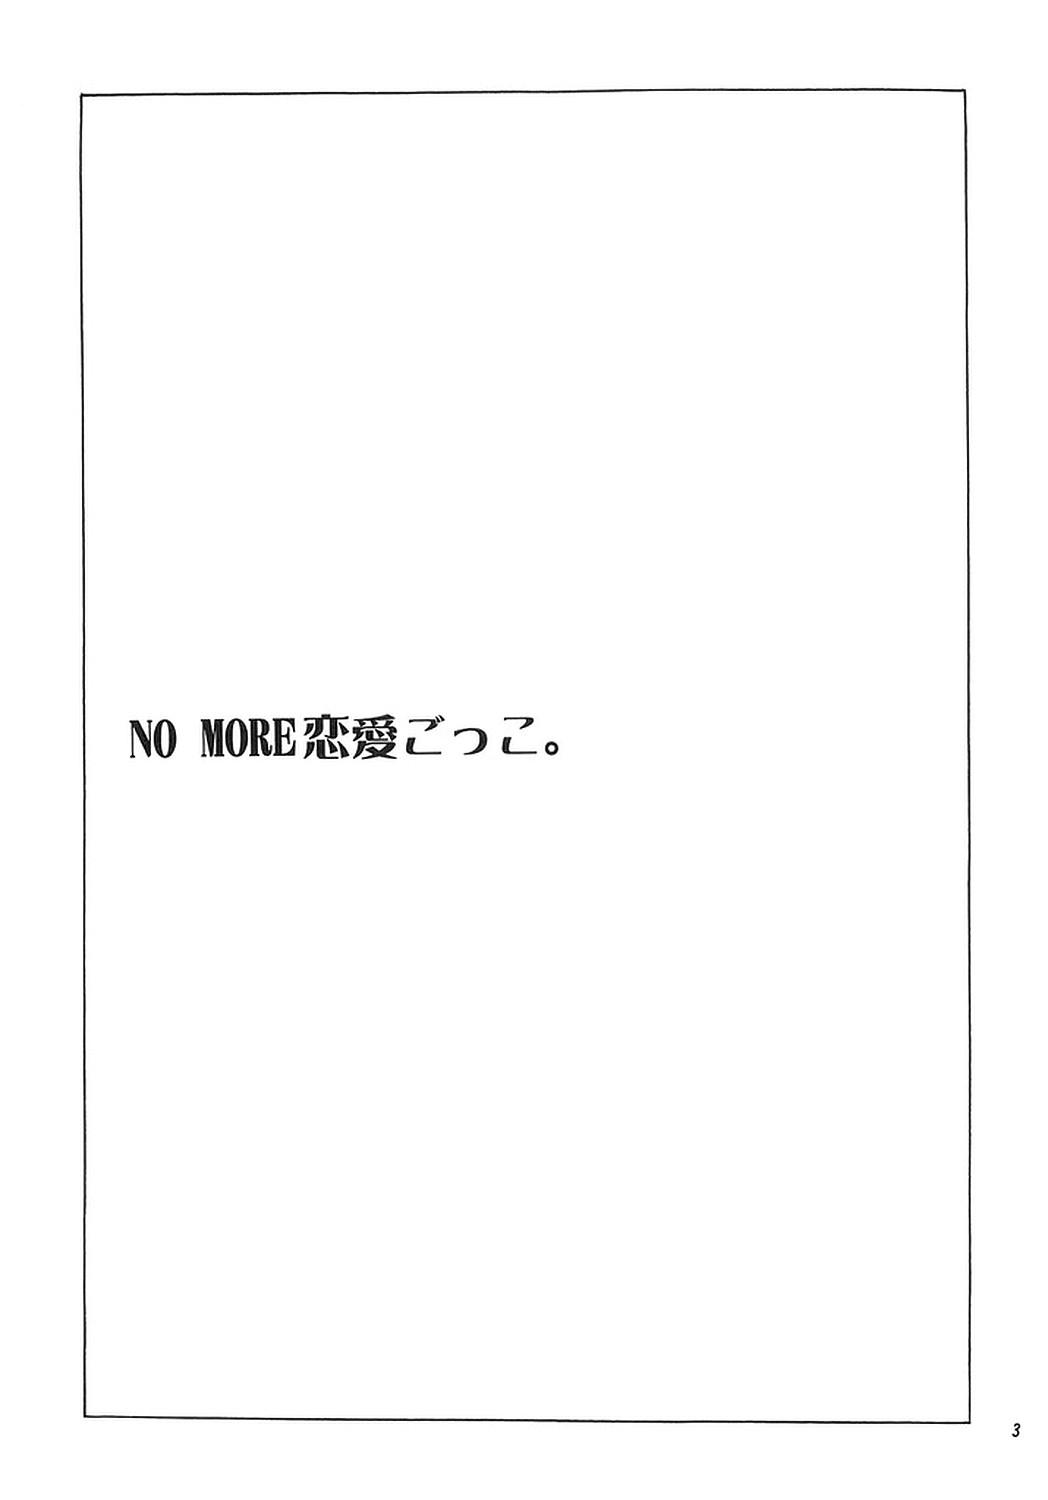 Camshow NO MORE Renai Gokko. - Fullmetal alchemist Short - Page 2